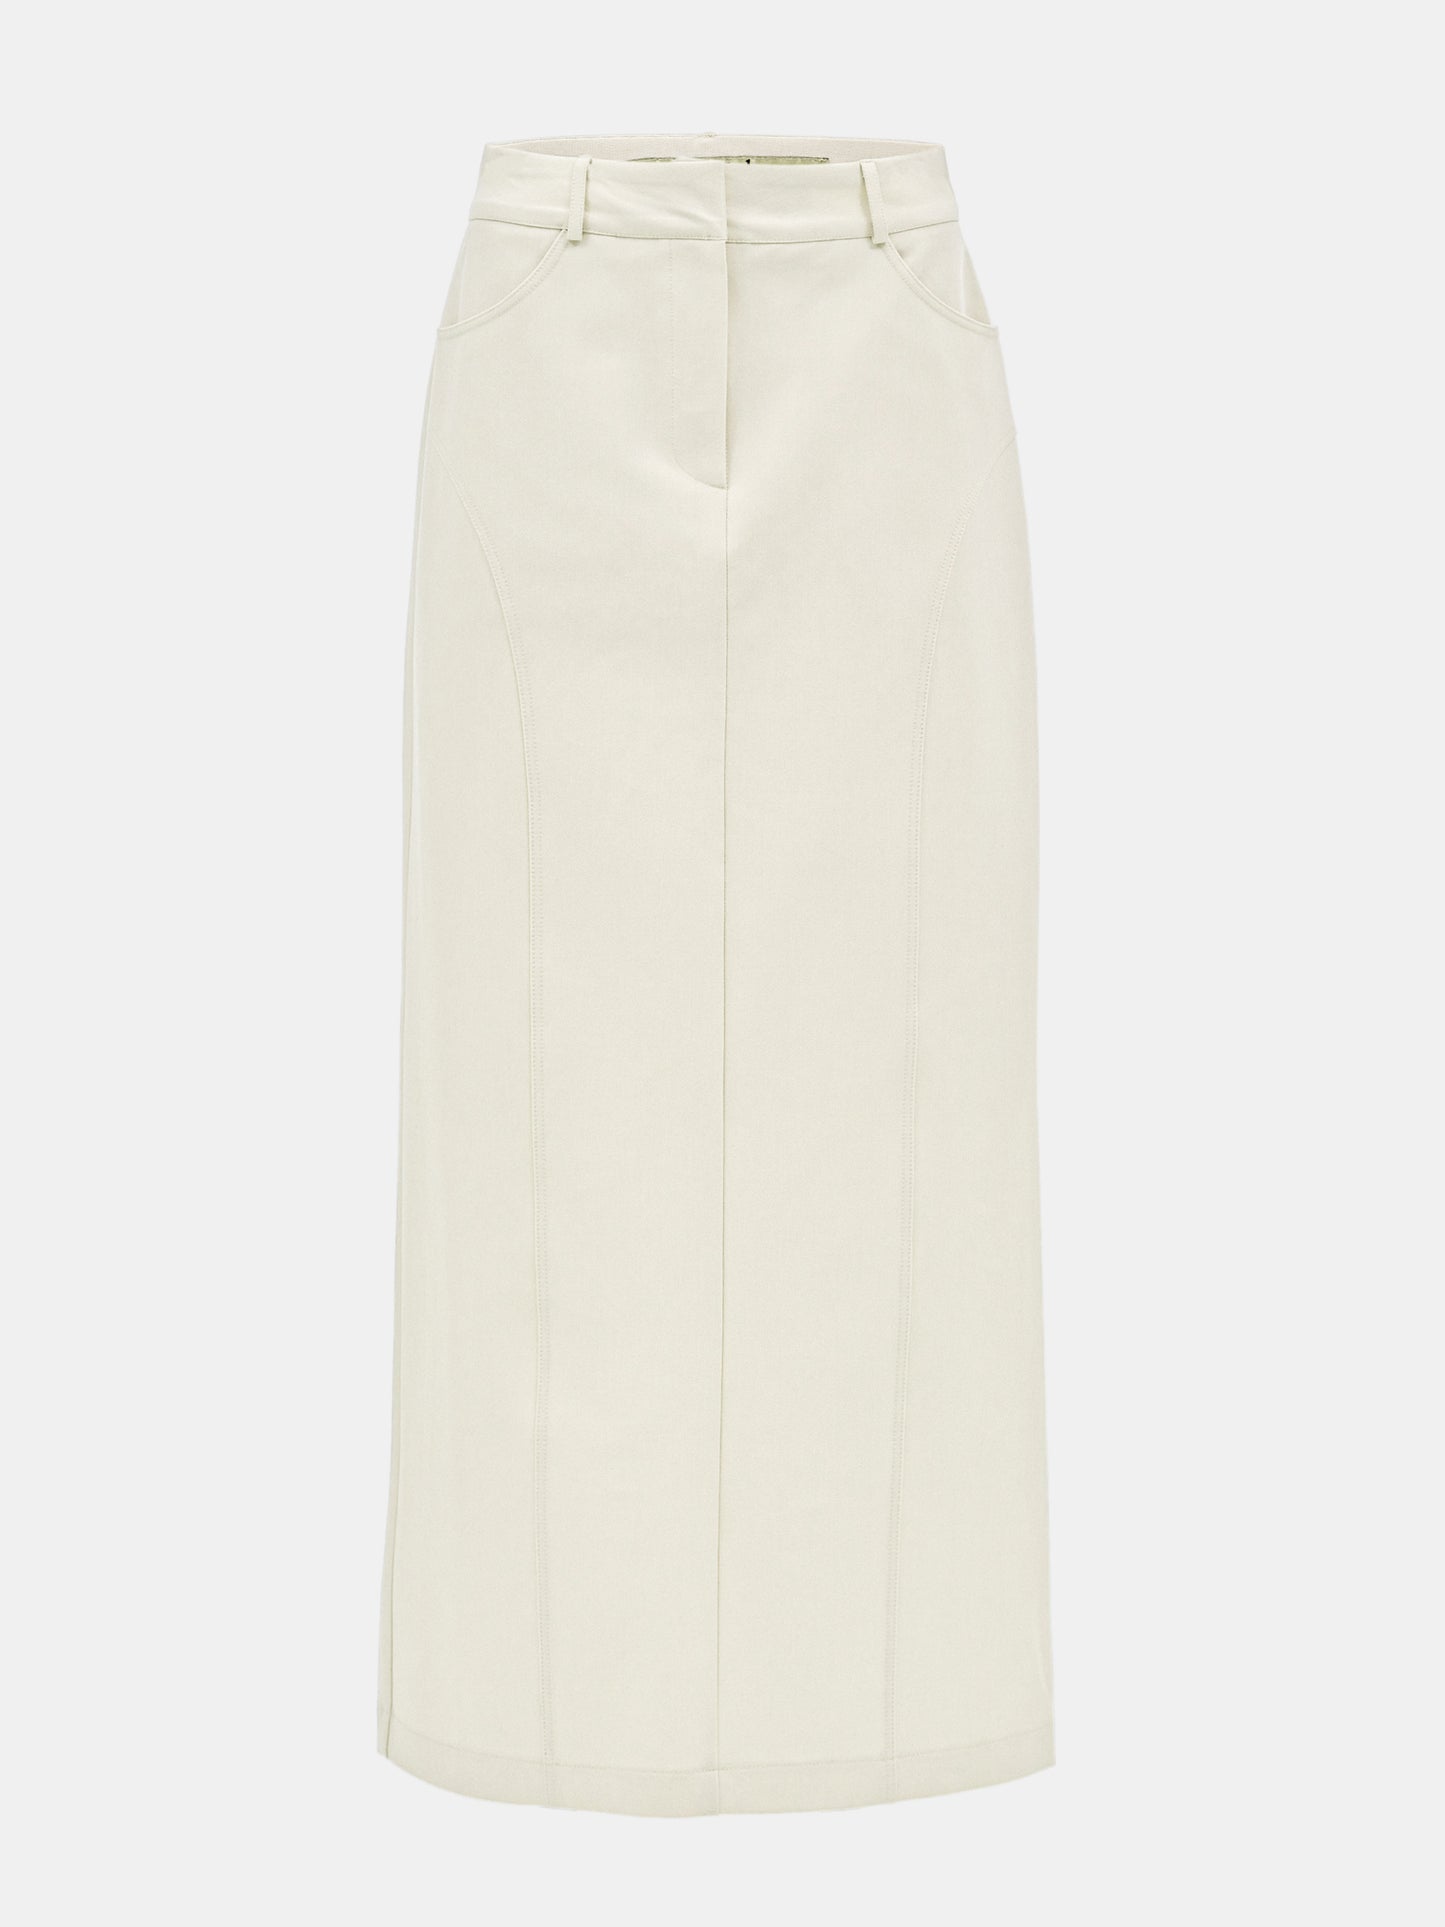 Long Pencil Skirt, Ivory